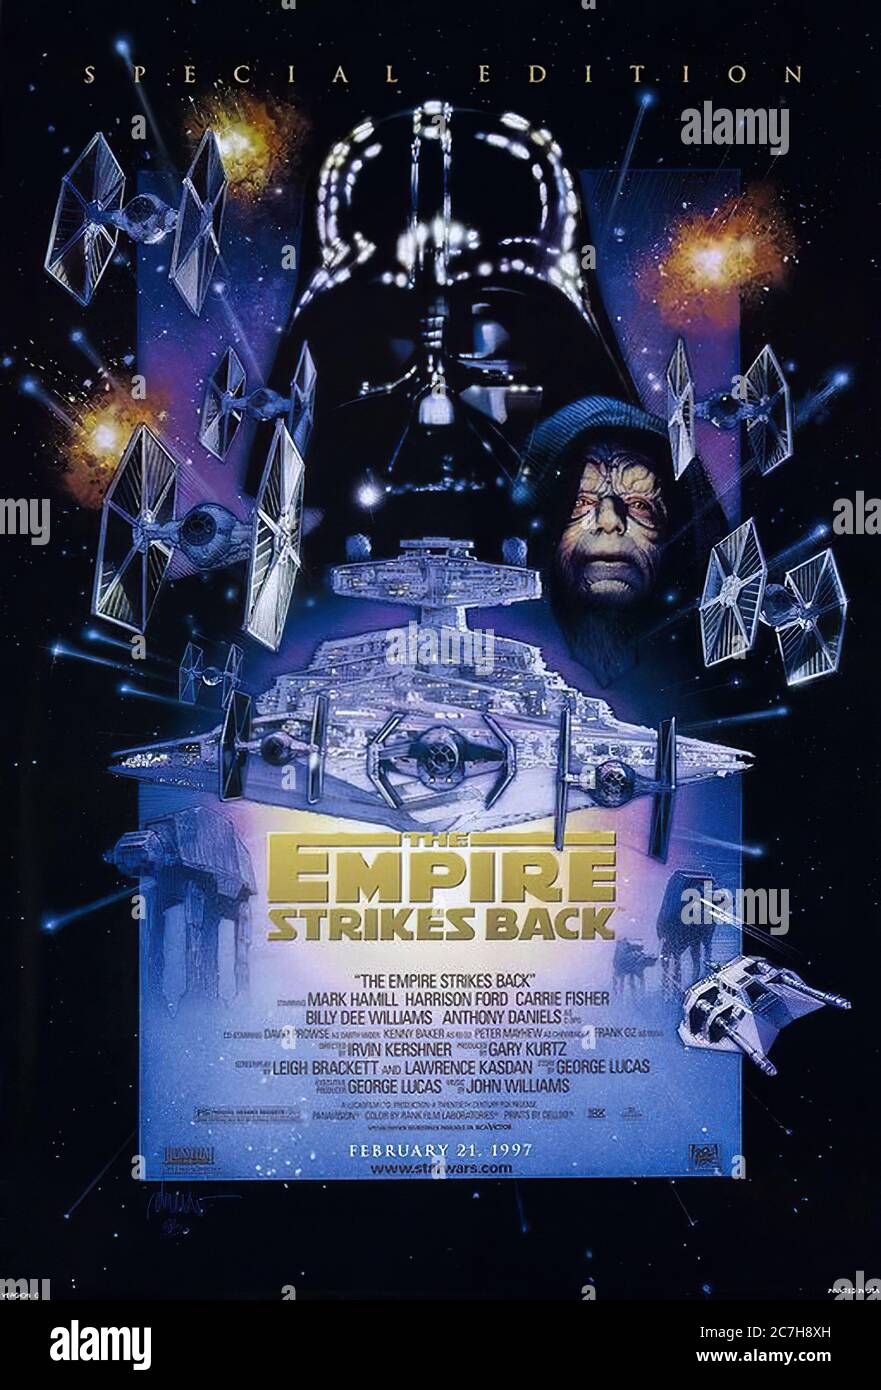 Star Wars Episode V the Empire Strikes Back - Movie Poster Stock Photo